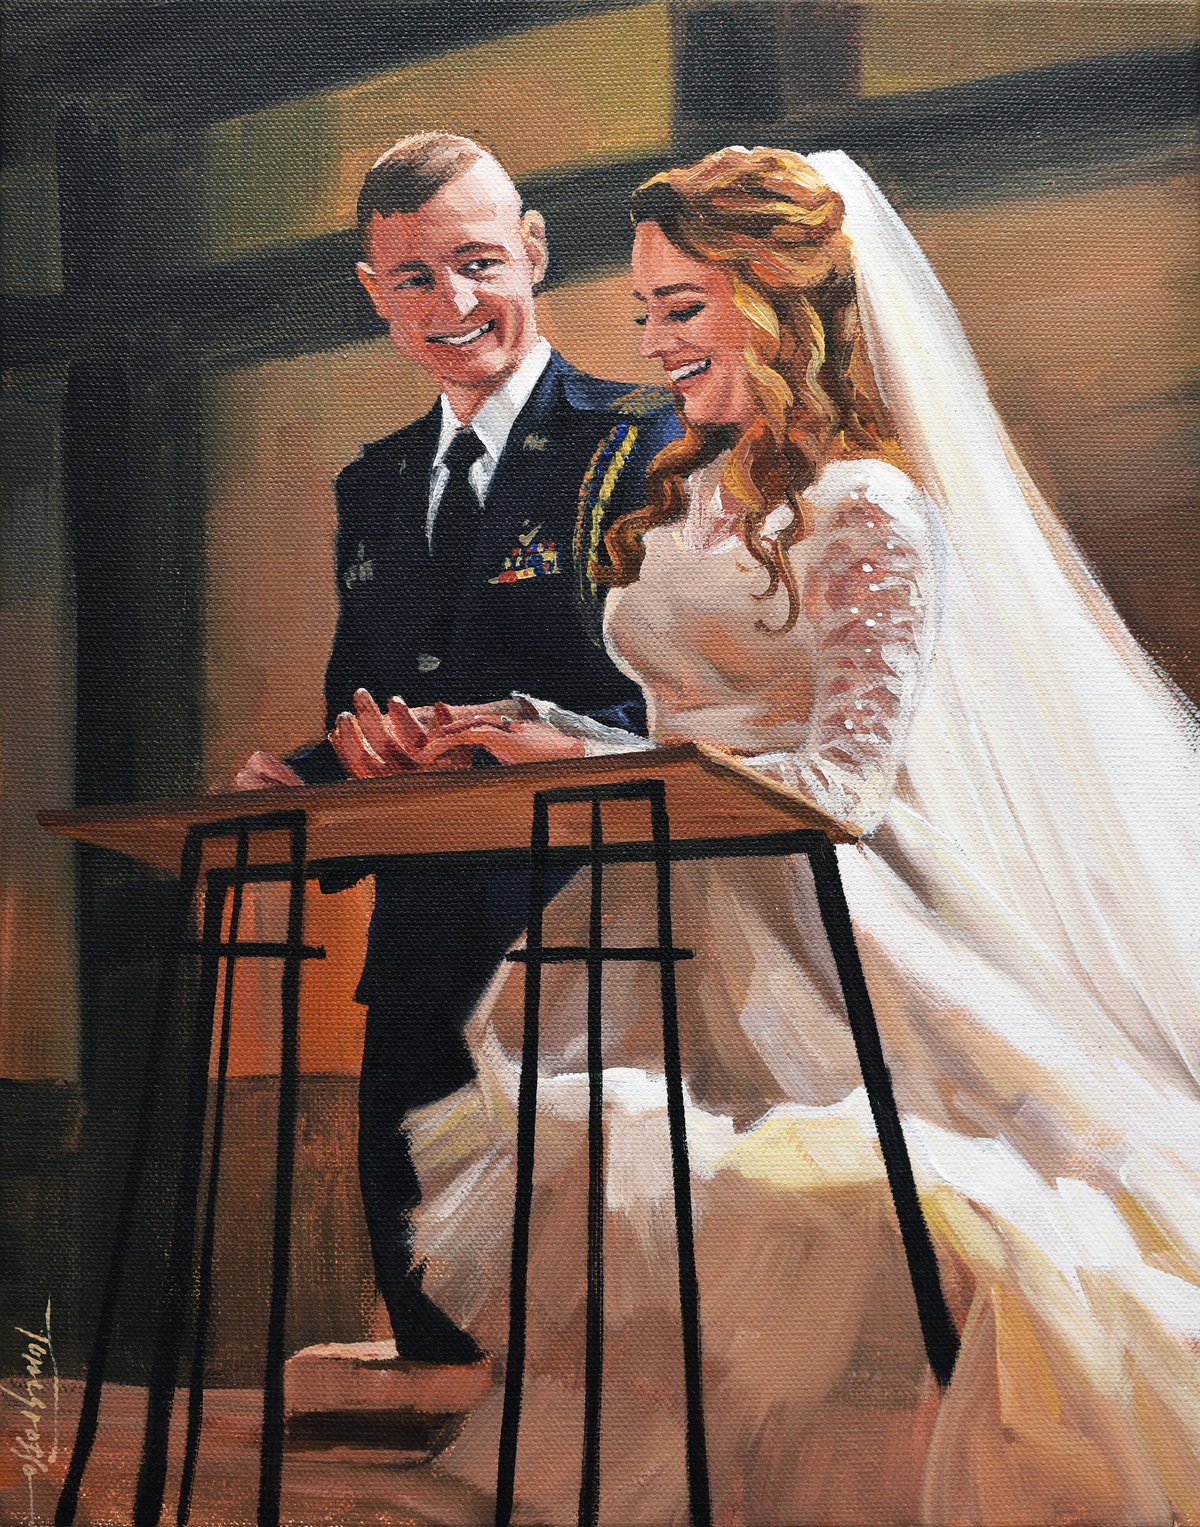 CUstom. wedding painting by stephanie torregrossa gaffney new orleans artist